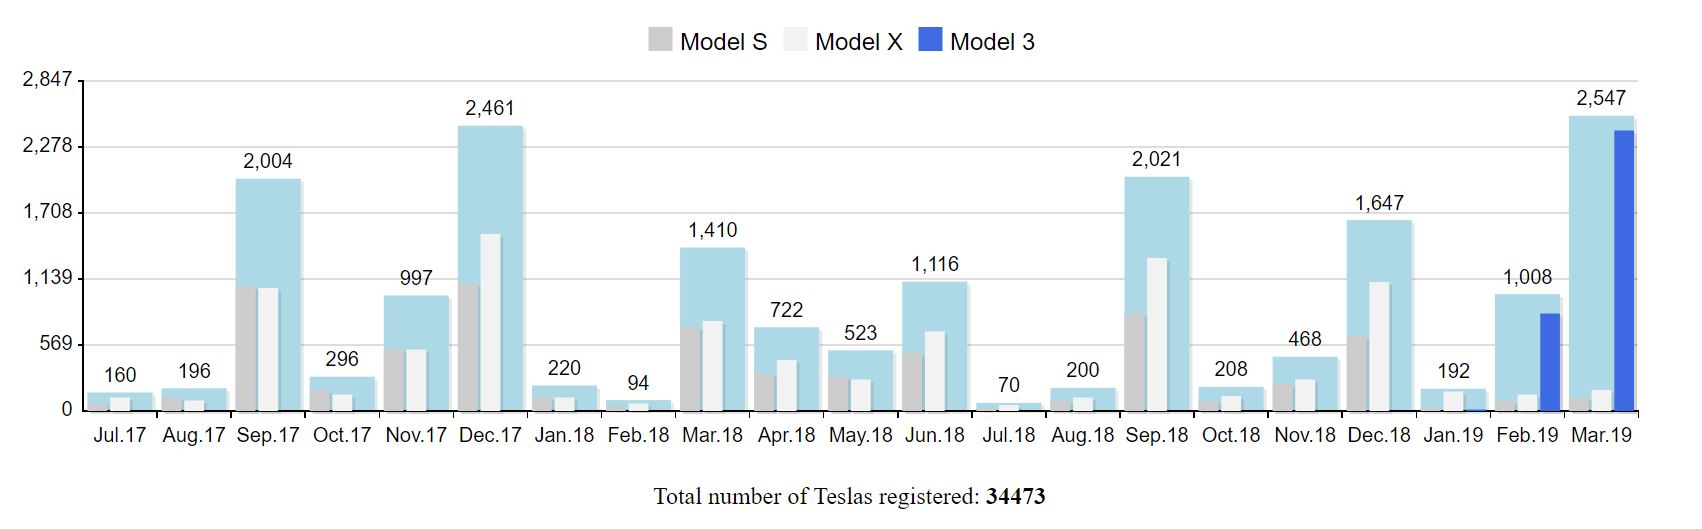 Tesla_sales_Norway_graph